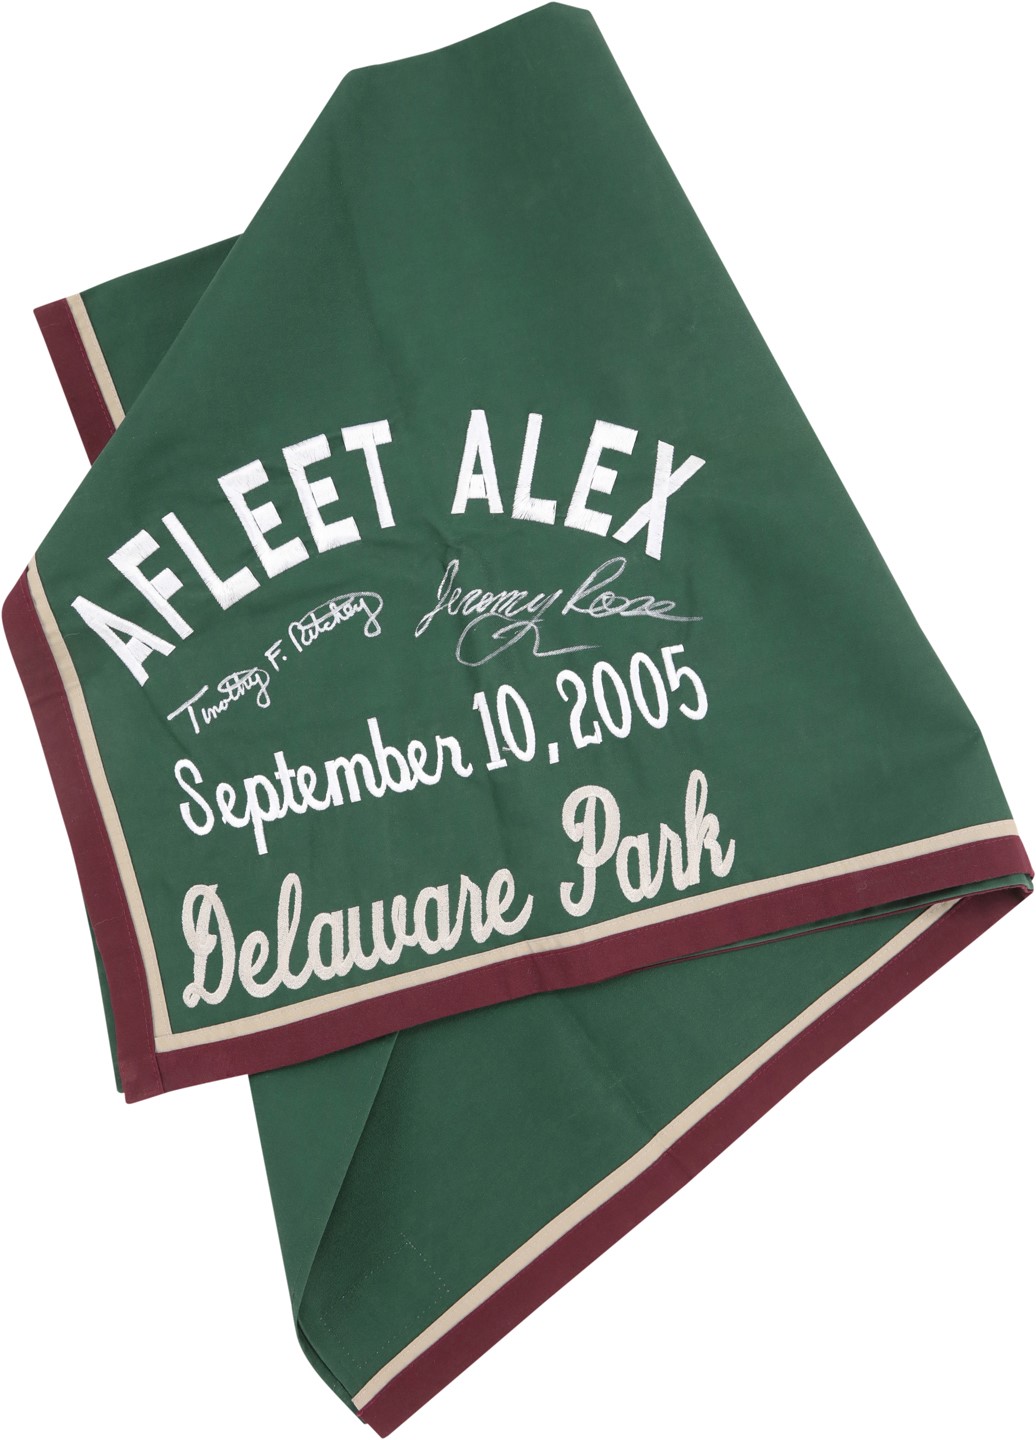 - Afleet Alex Delaware Park Worn Saddlecloth